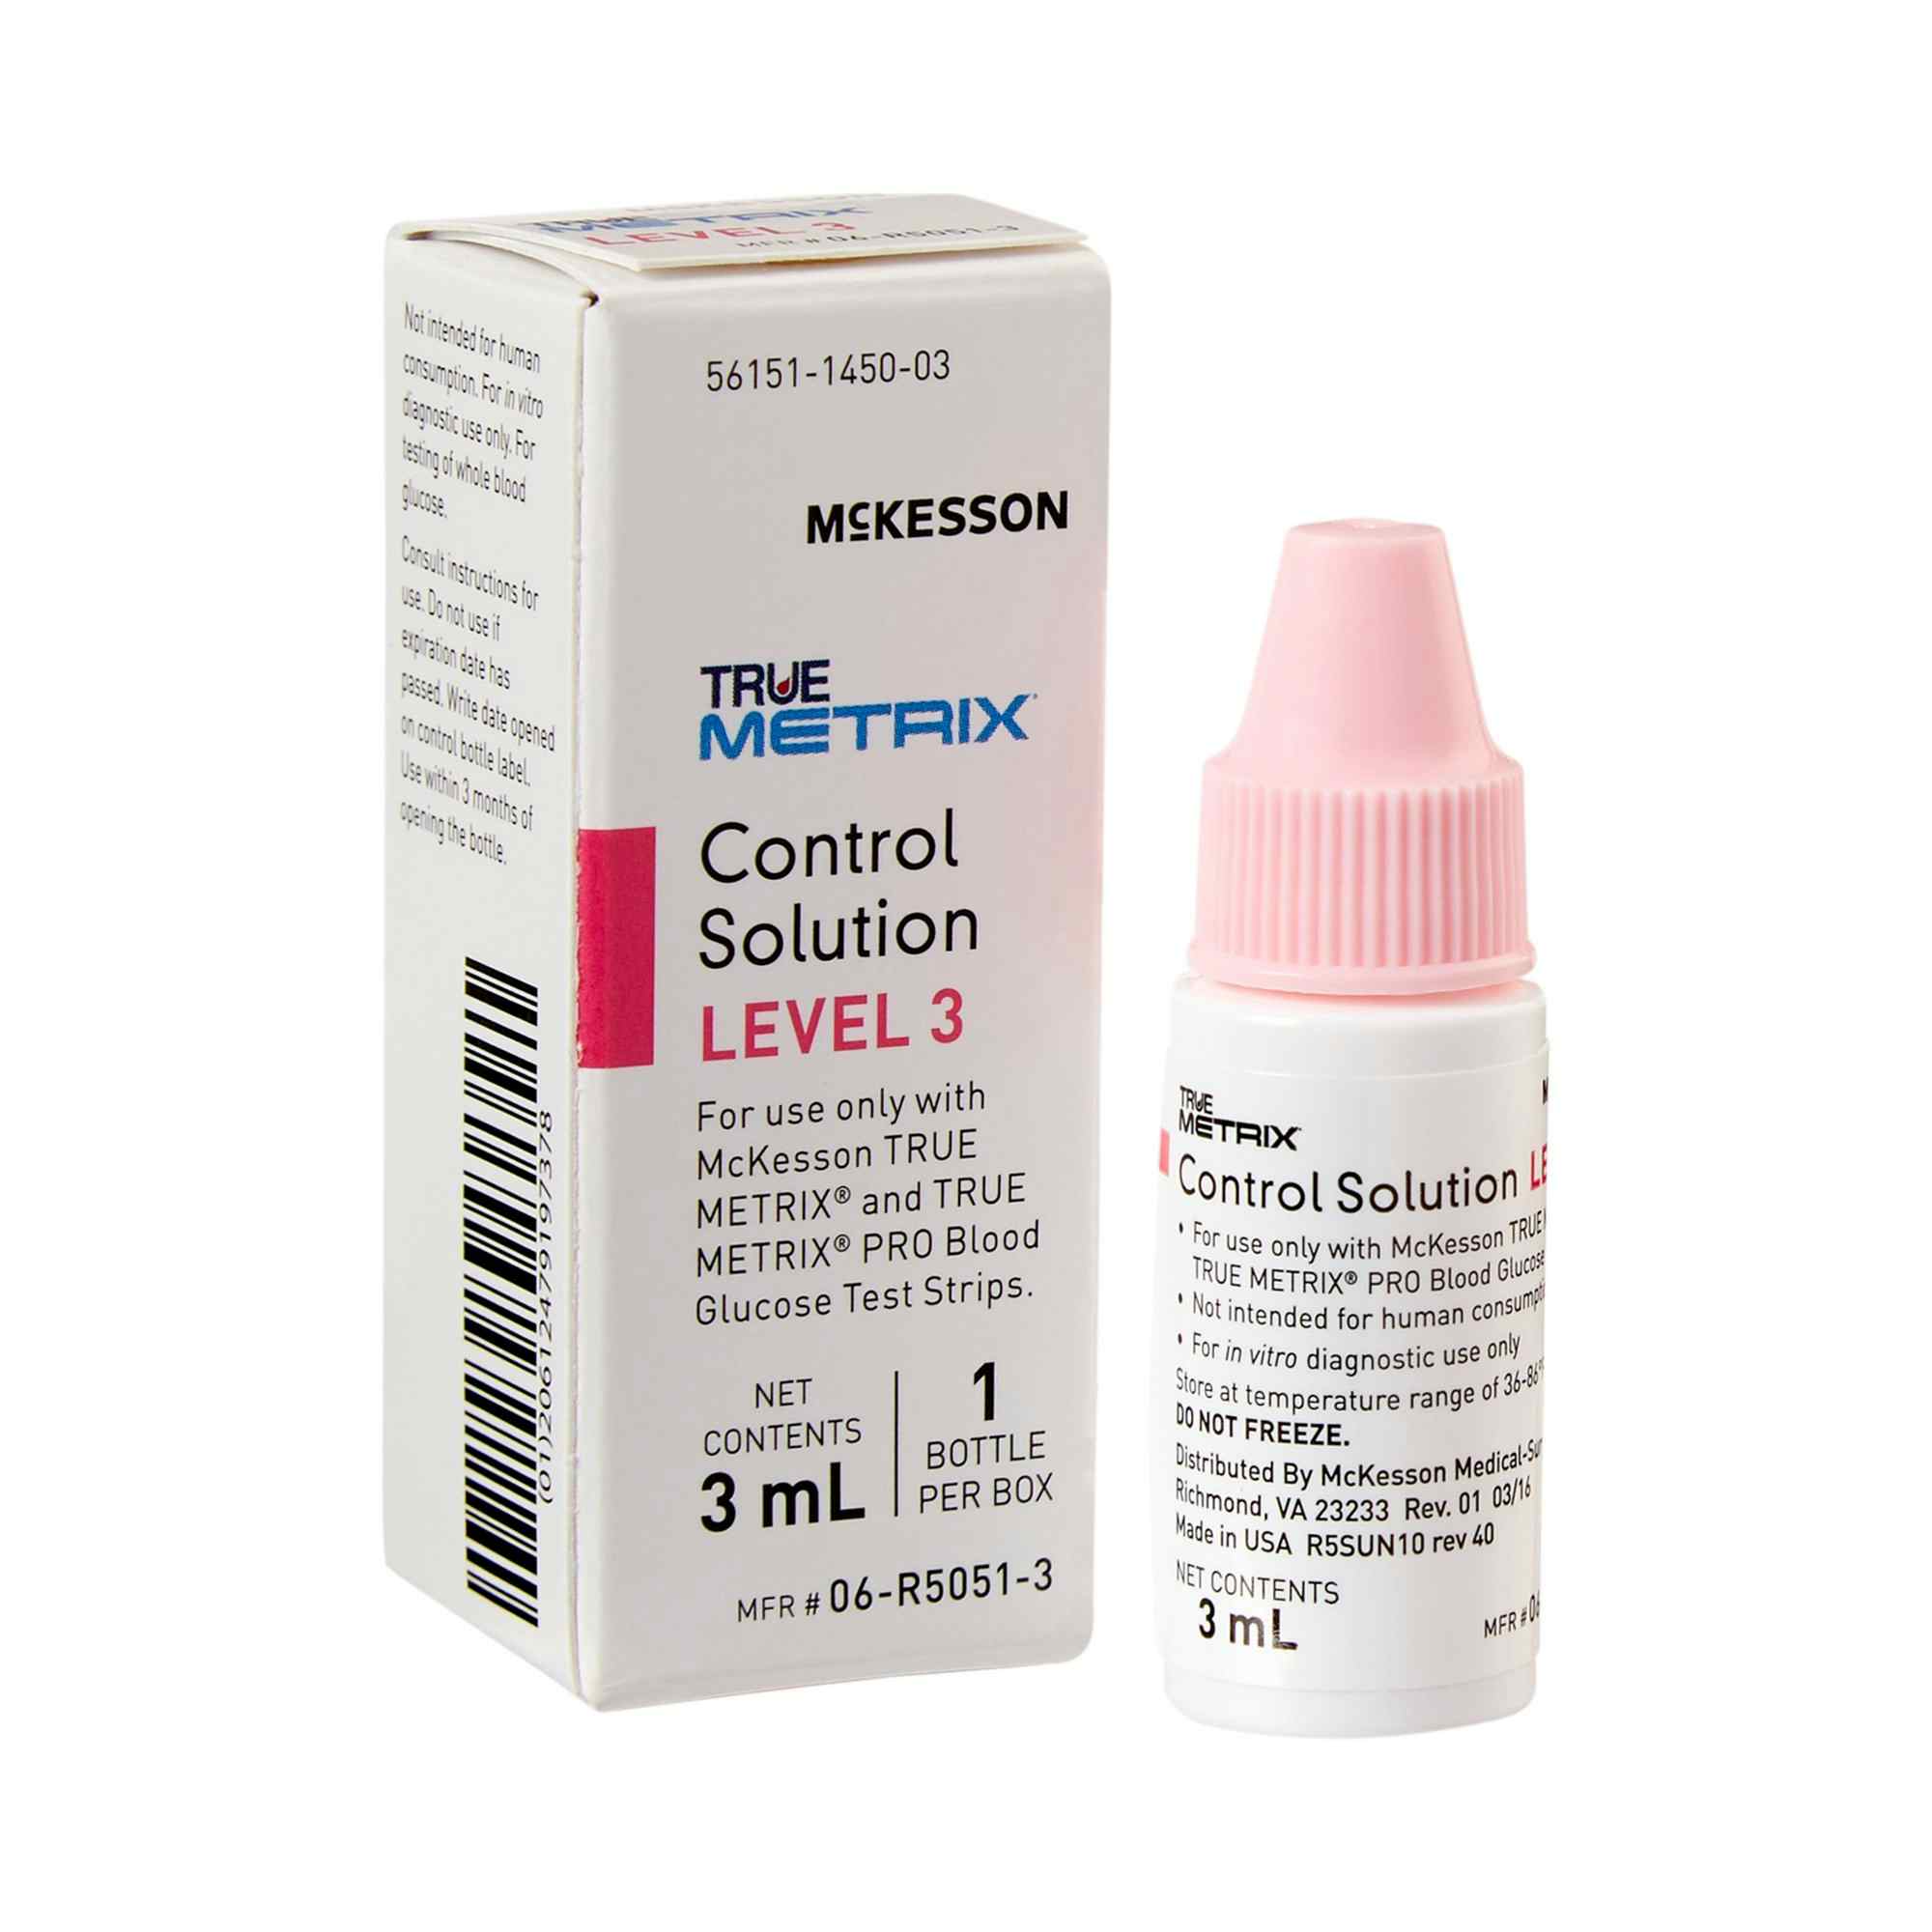 McKesson TRUE METRIX Control Solution, 3 mL Level 3, 06-R5051-3, Case of 24